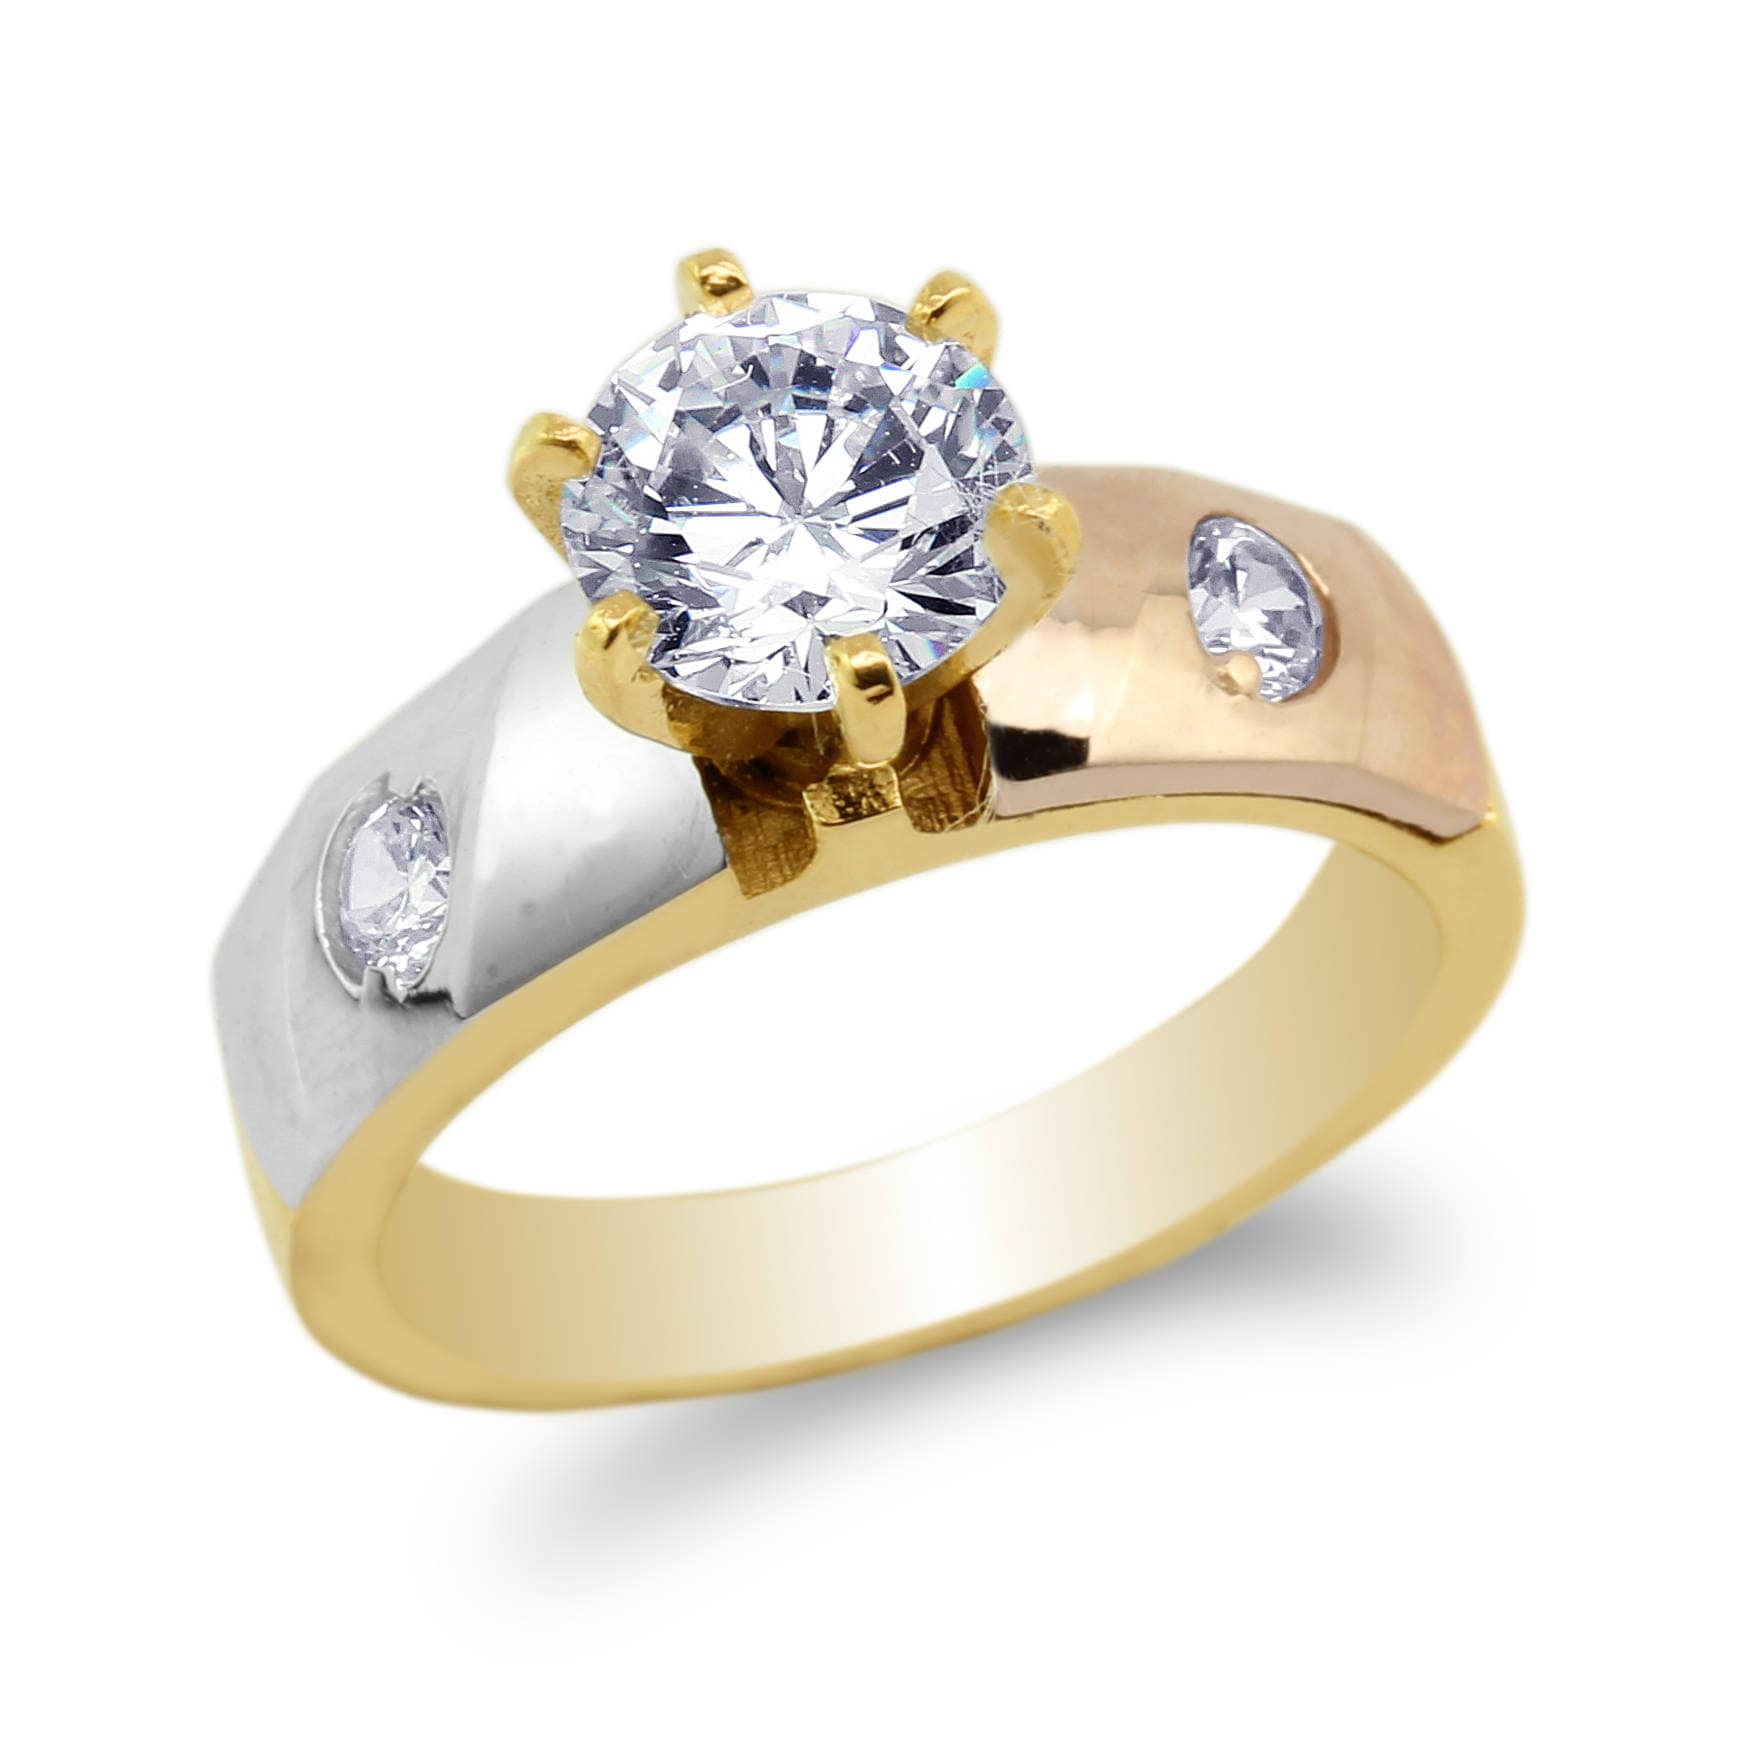 JamesJenny Ladies 10K Yellow Rose Gold Three Colored Wedding Band Ring Size 4-10